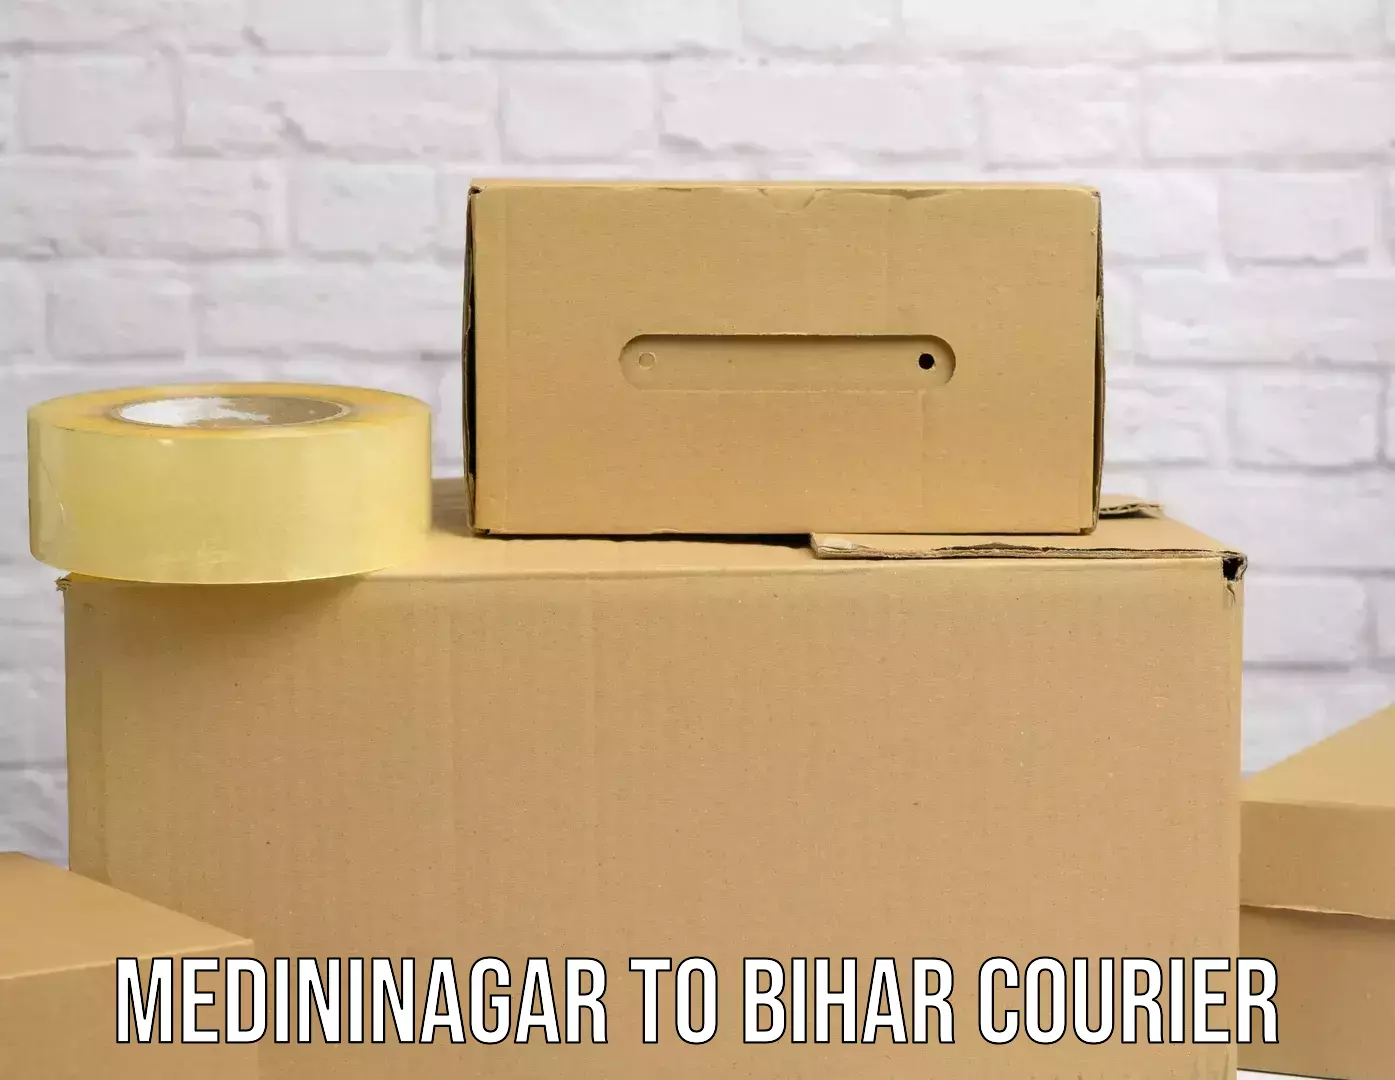 Courier service innovation Medininagar to Bhojpur